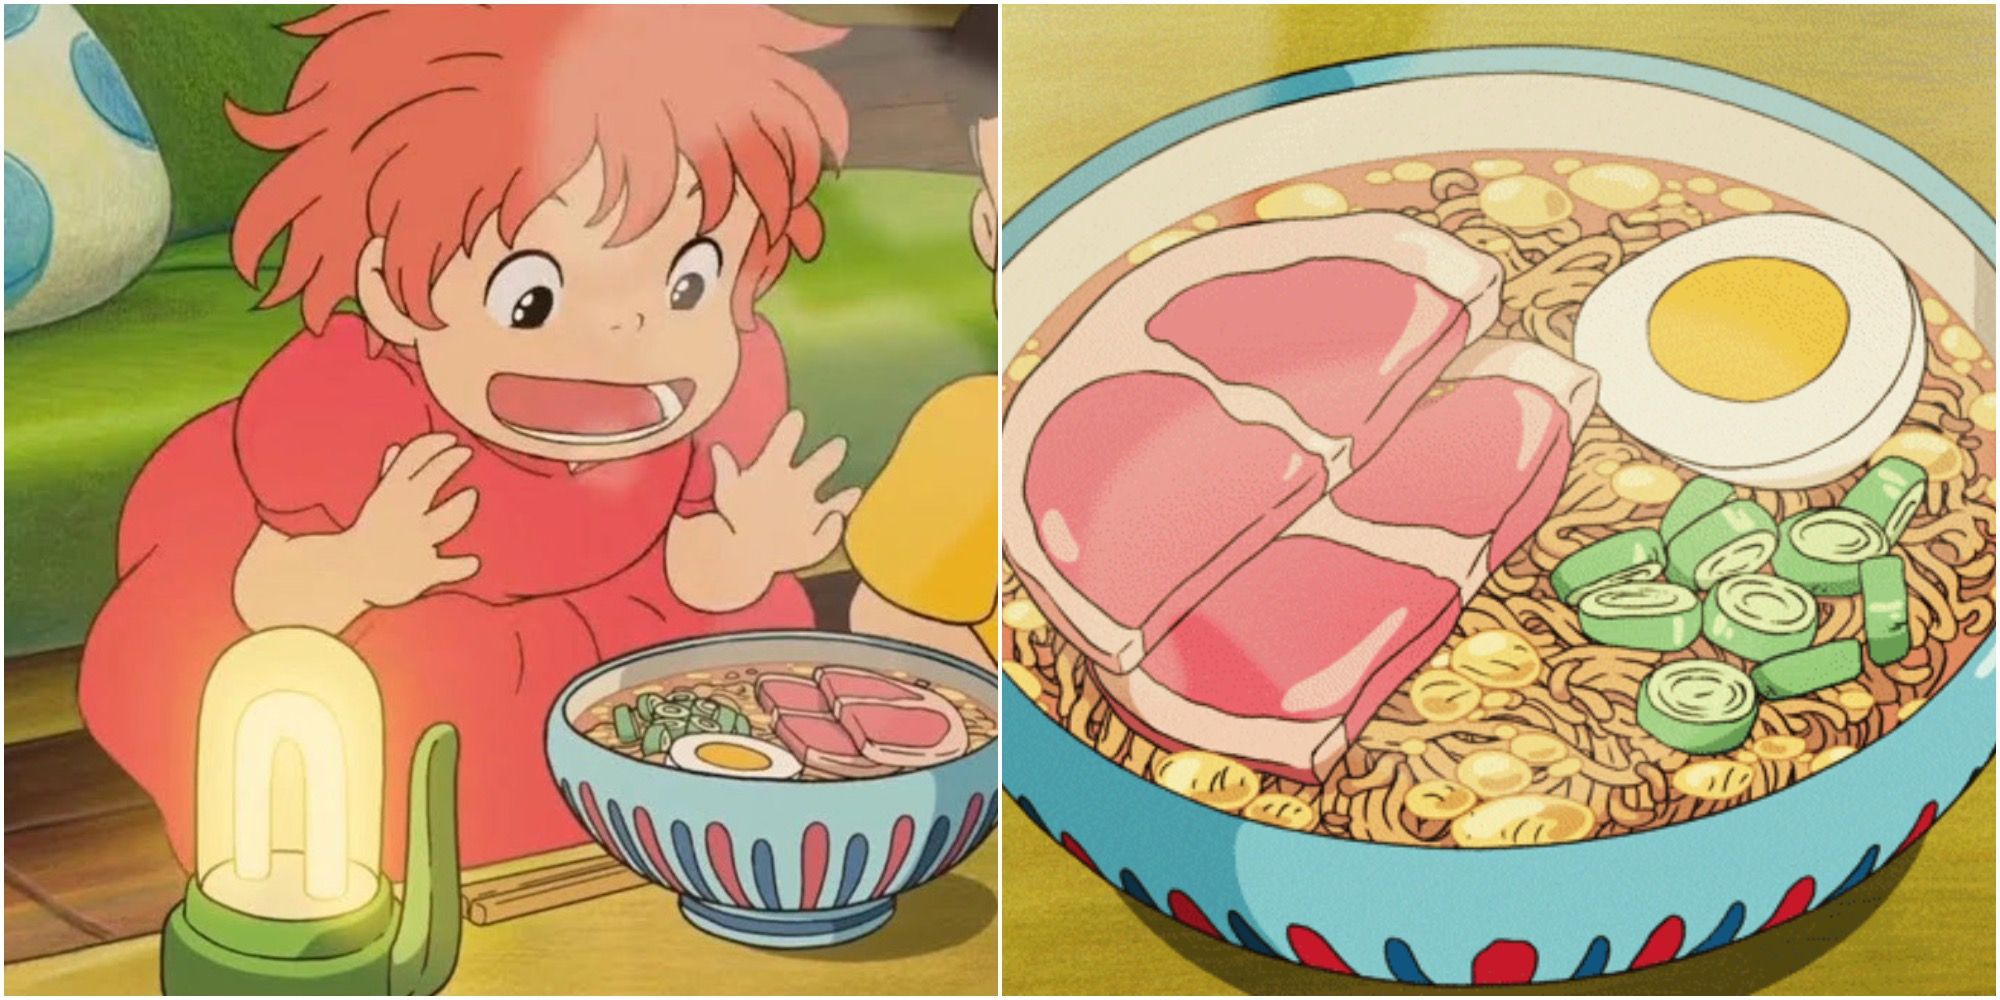 Studio Ghibli Ponyo Anime Ponyo впервые пробует лапшу рамен